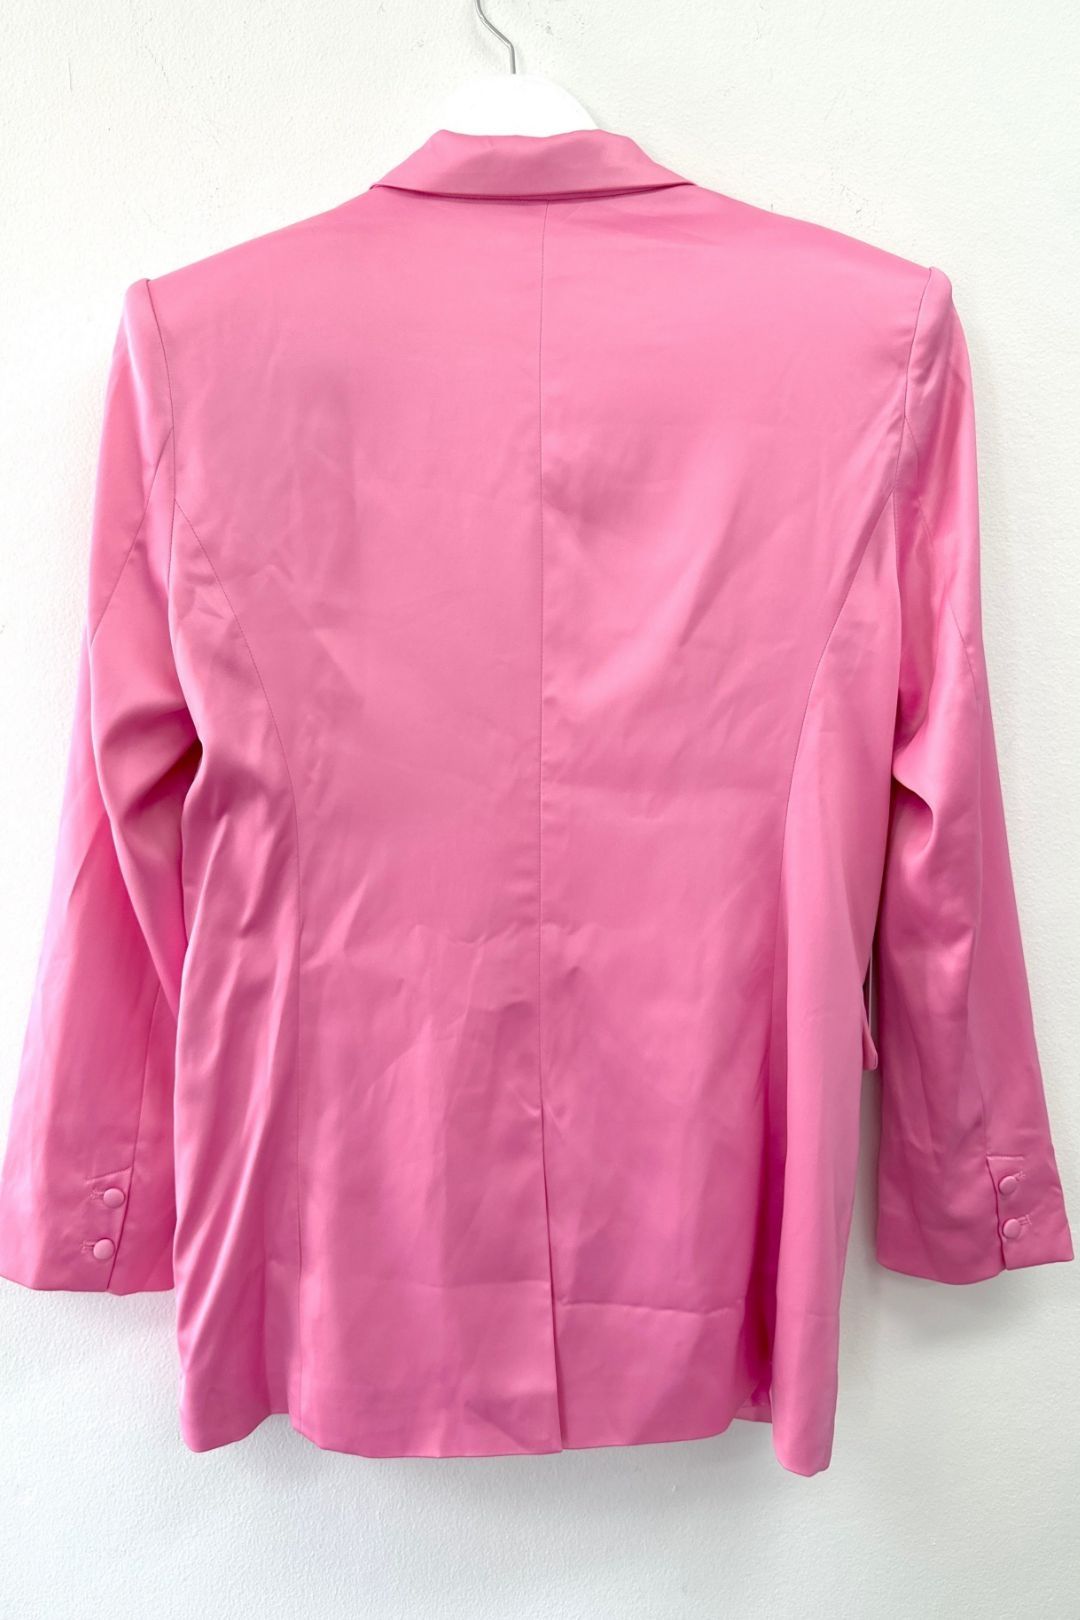 Ronny Kobo - Alex Pink Charmeuse Blazer Jacket